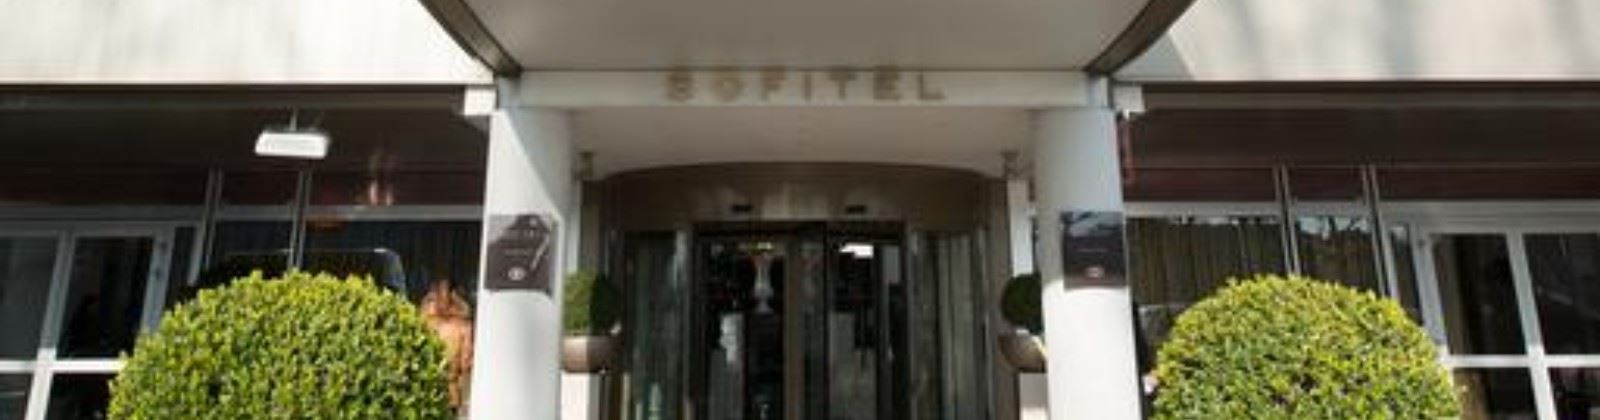 OLEVENE image - sofitel-lyon-bellecour-olevene-restaurant-hotel-reunion-